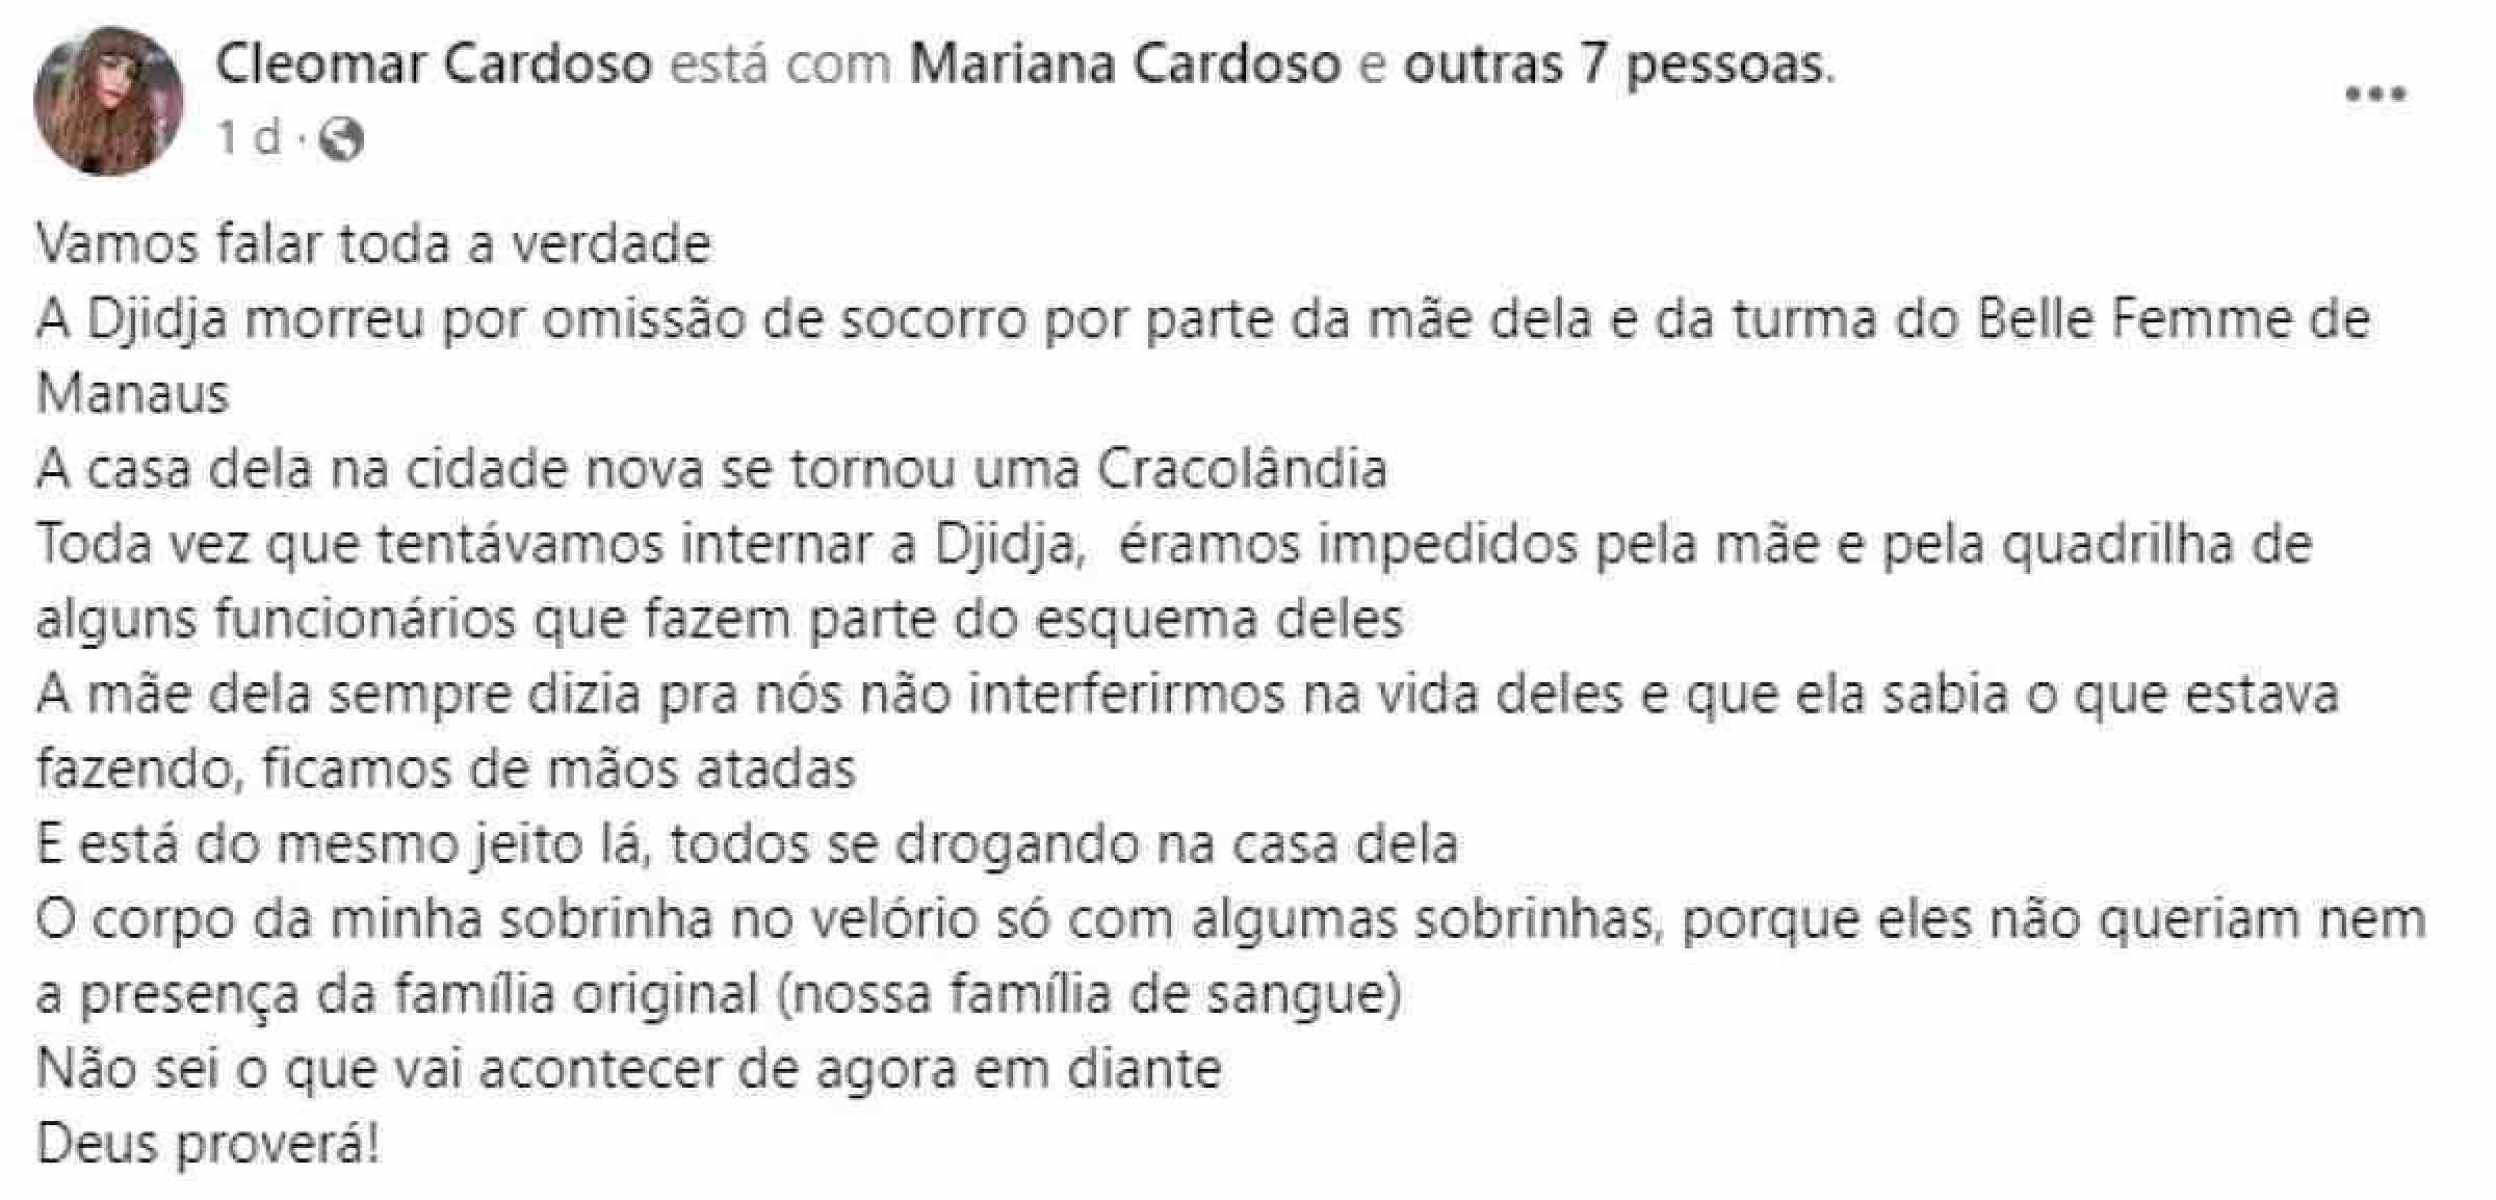 Cleomar Cardoso, tia de Djidja Cardoso, postou no Facebook 